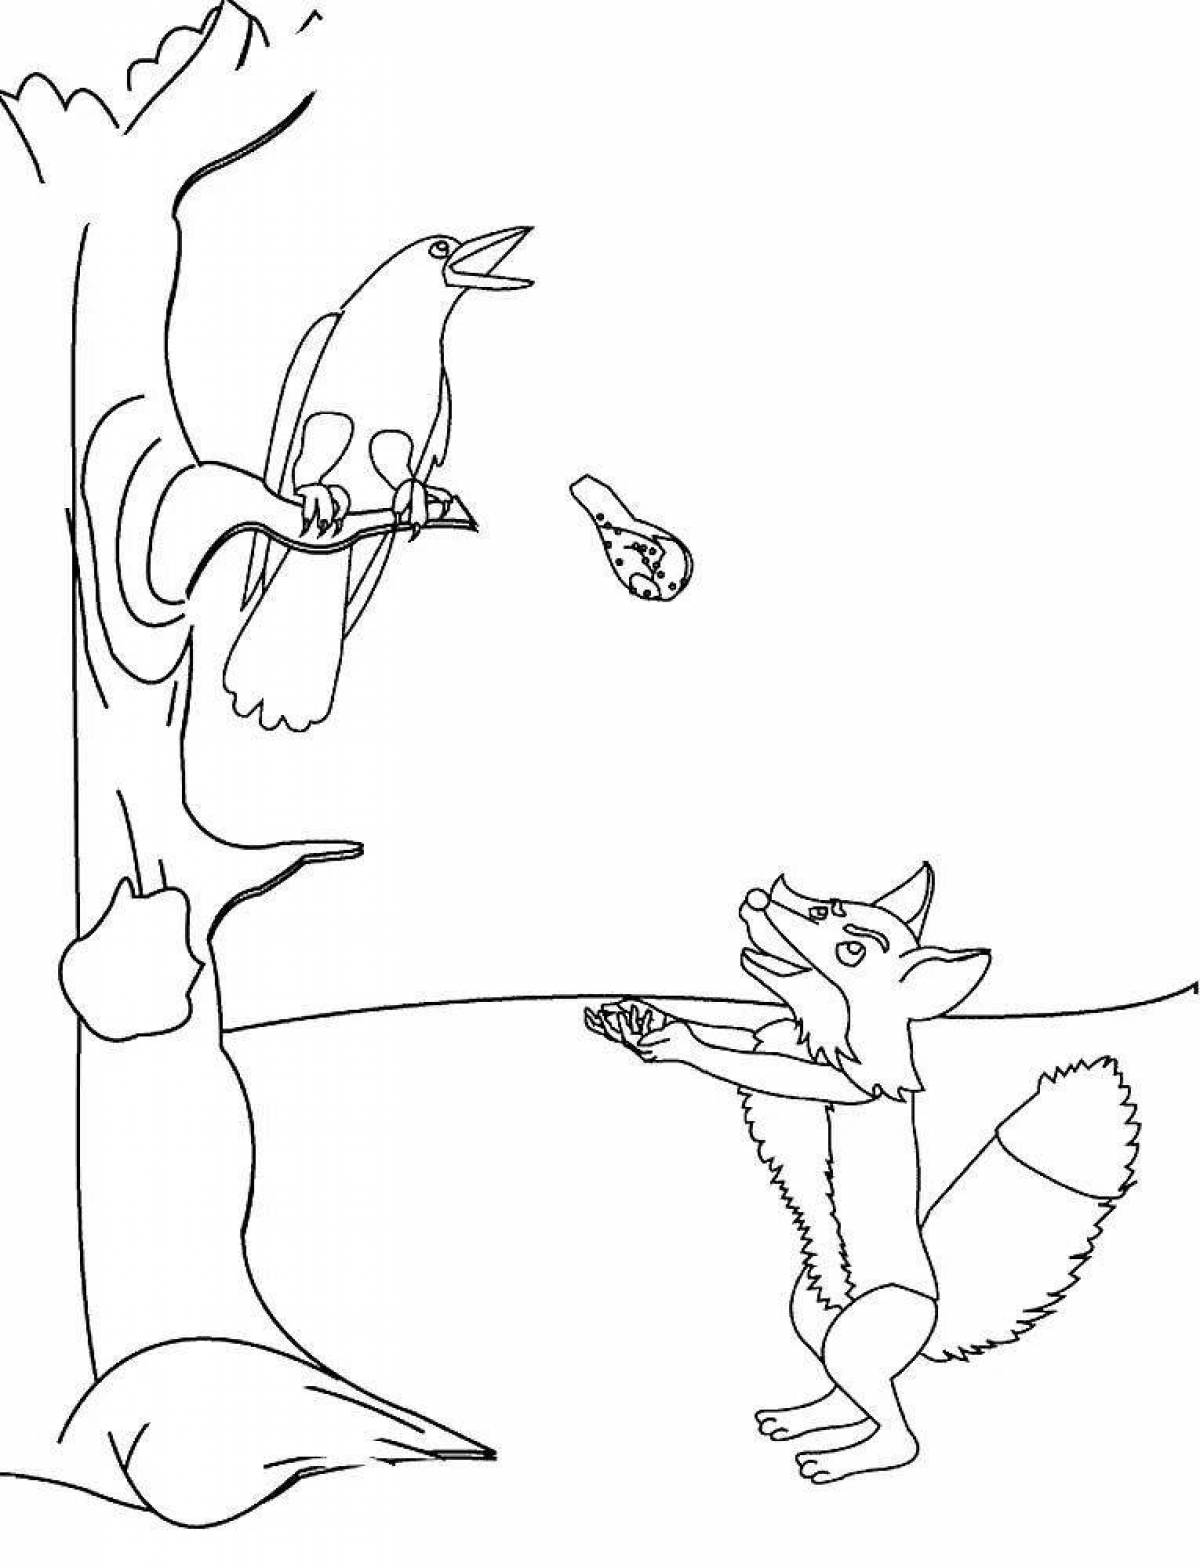 Рисунок по басне Крылова ворона и лисица